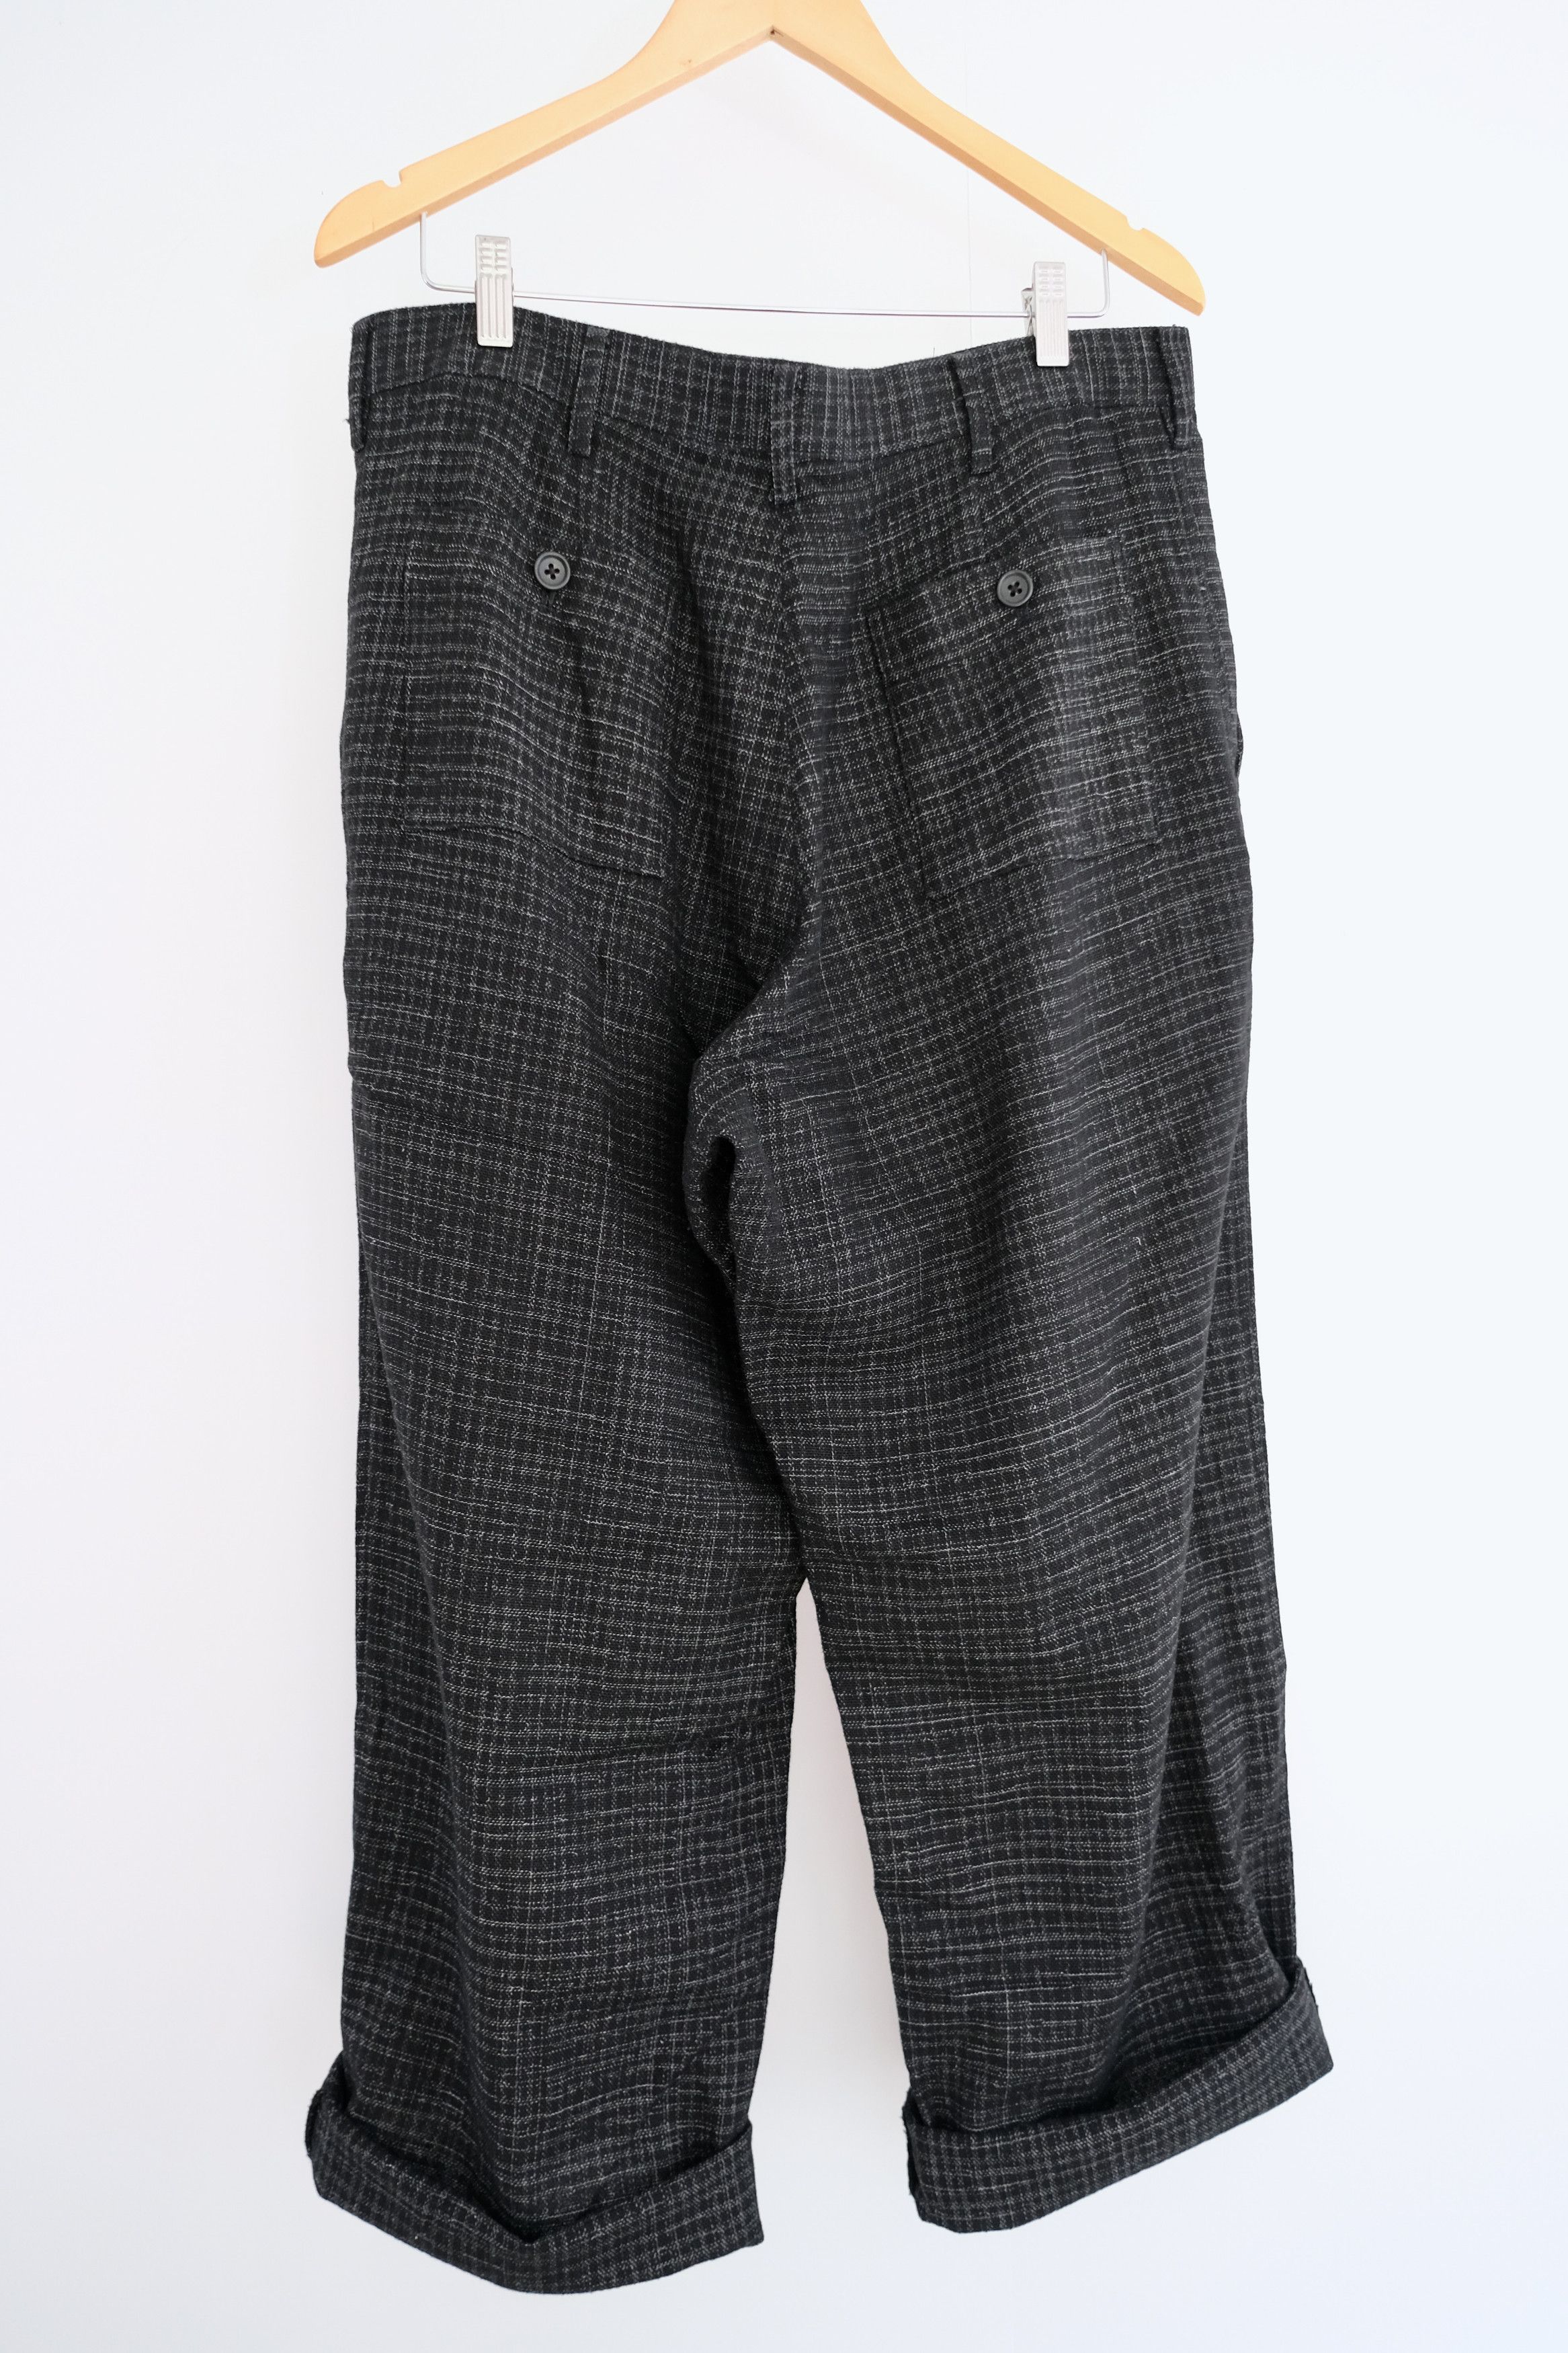 🎐 YFM [1990s] Wide Grid-Weave Pants - 20